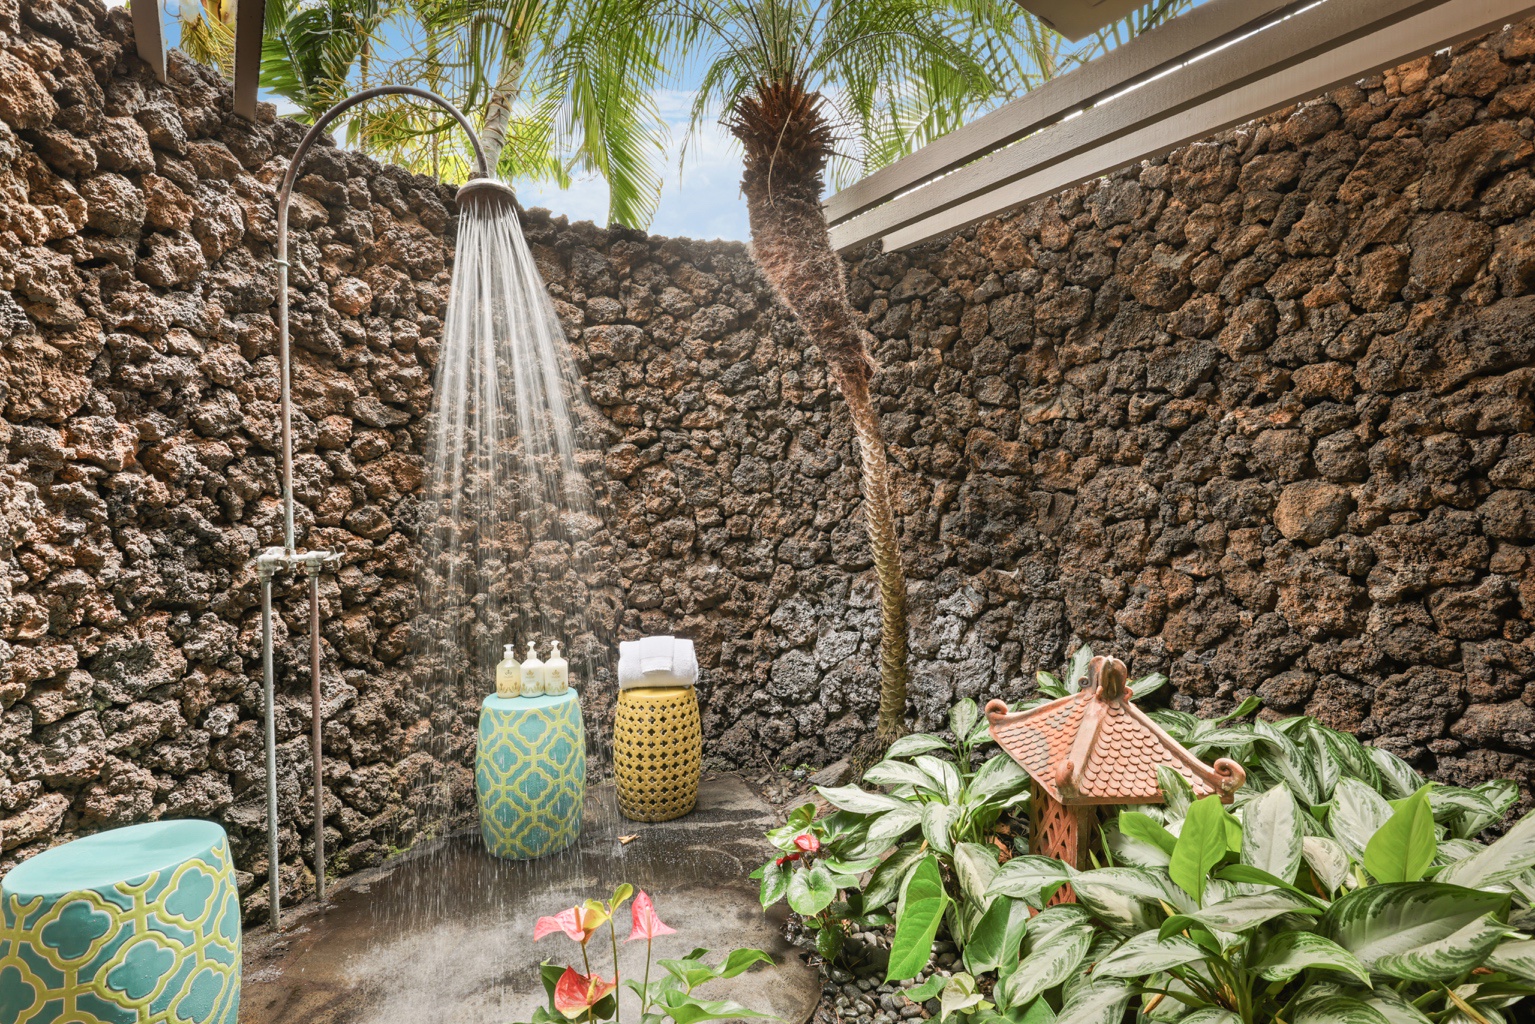 Kailua Kona Vacation Rentals, 3BD Golf Villa (3101) at Four Seasons Resort at Hualalai - Private outdoor shower - a true tropical treat!